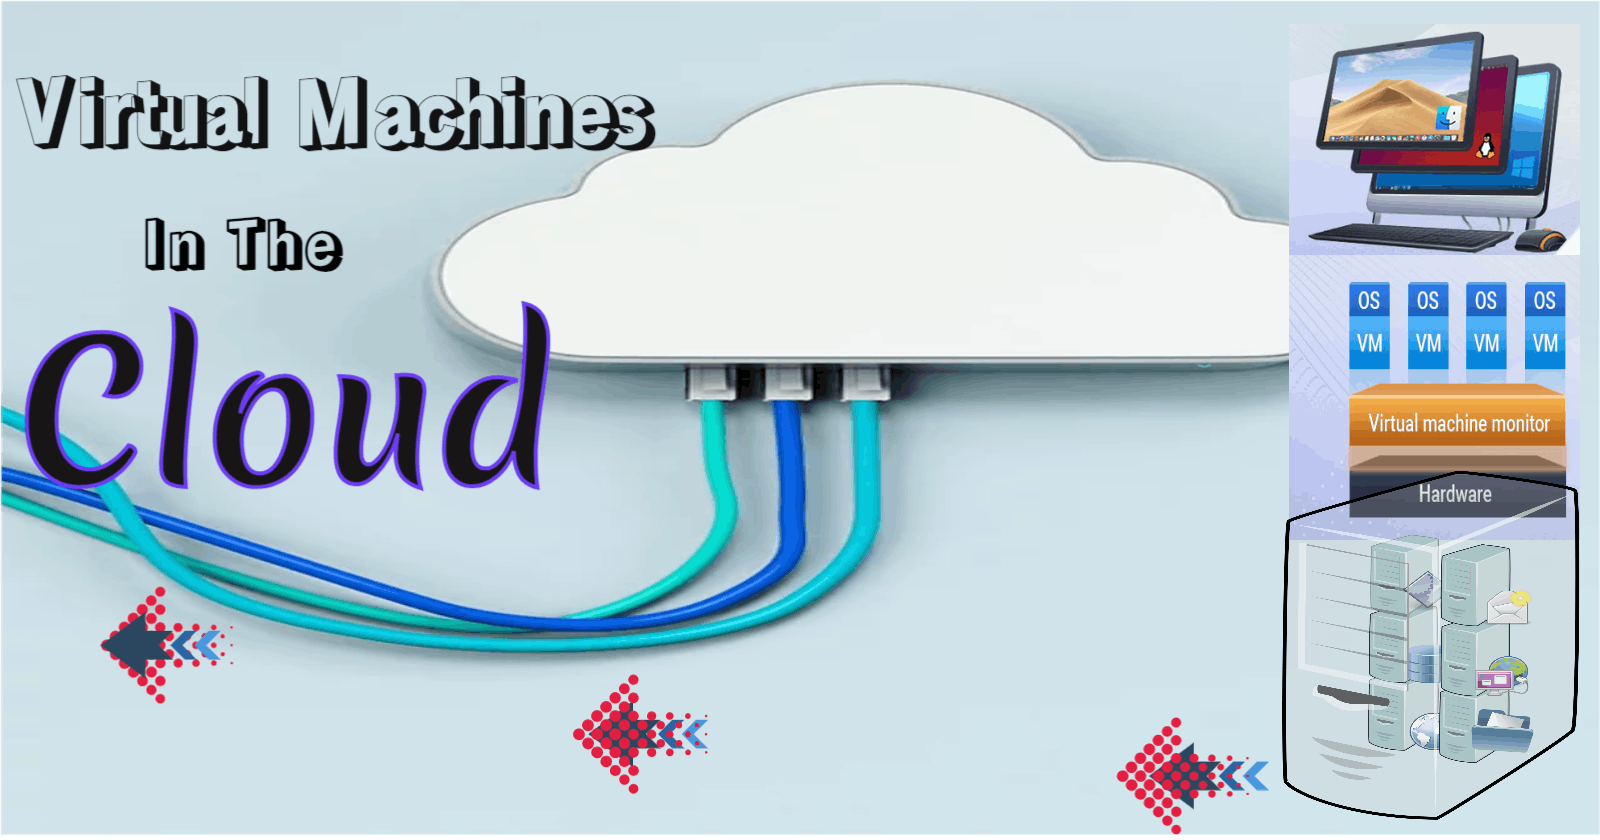 Virtual Machines in the Cloud